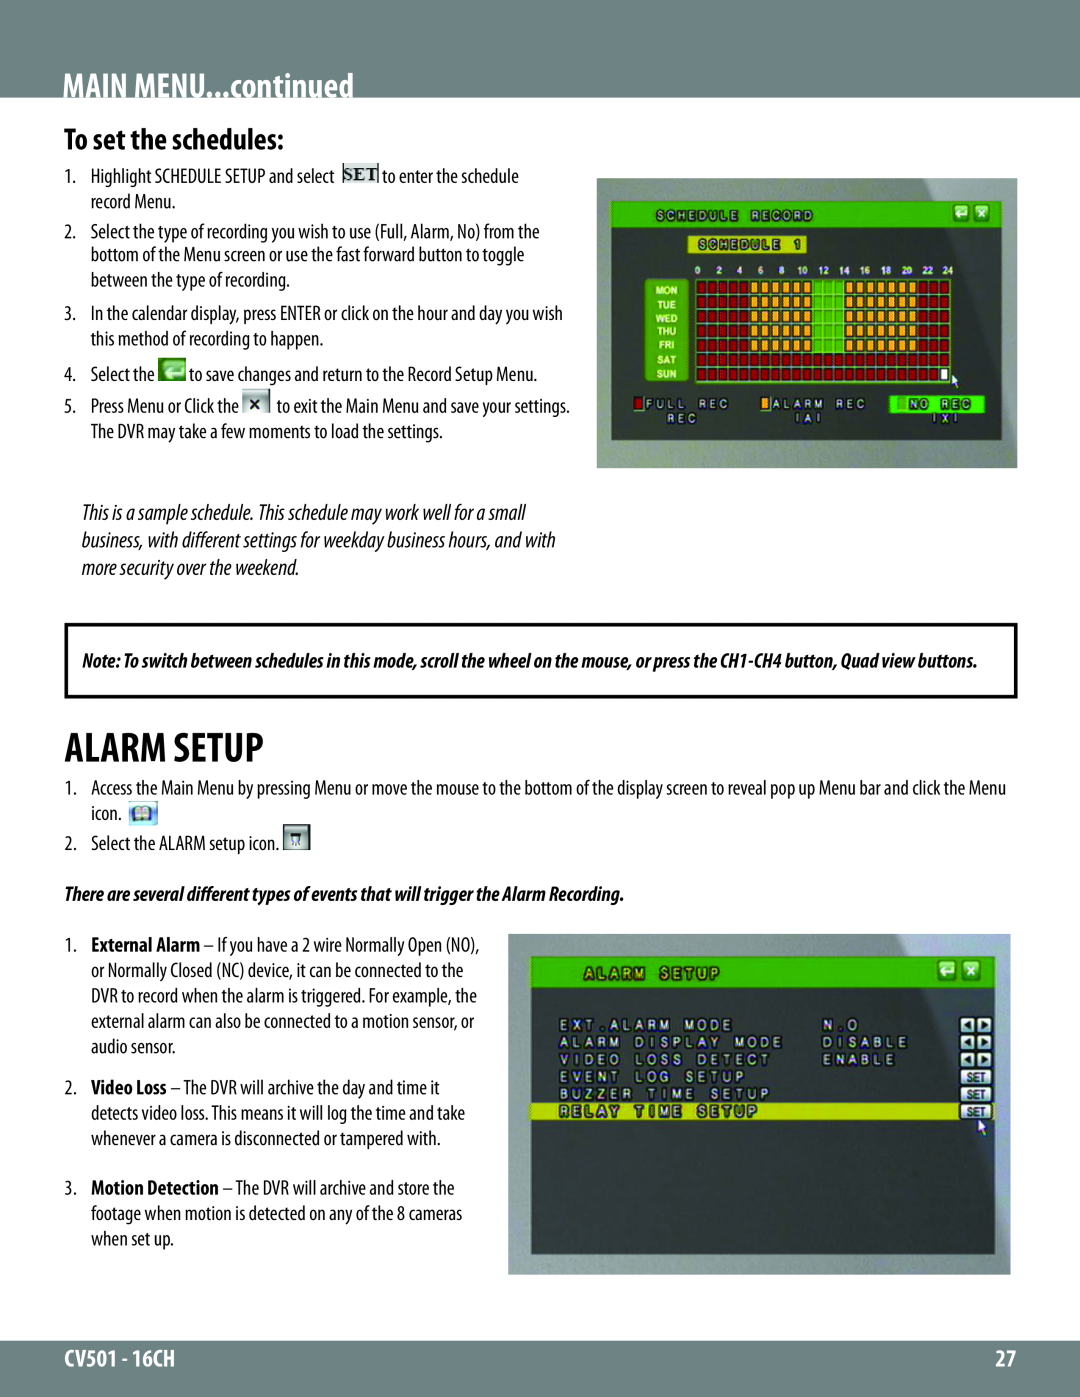 SVAT Electronics CV501 - 16CH instruction manual To set the schedules, Alarm Setup, MAIN MENU...continued 